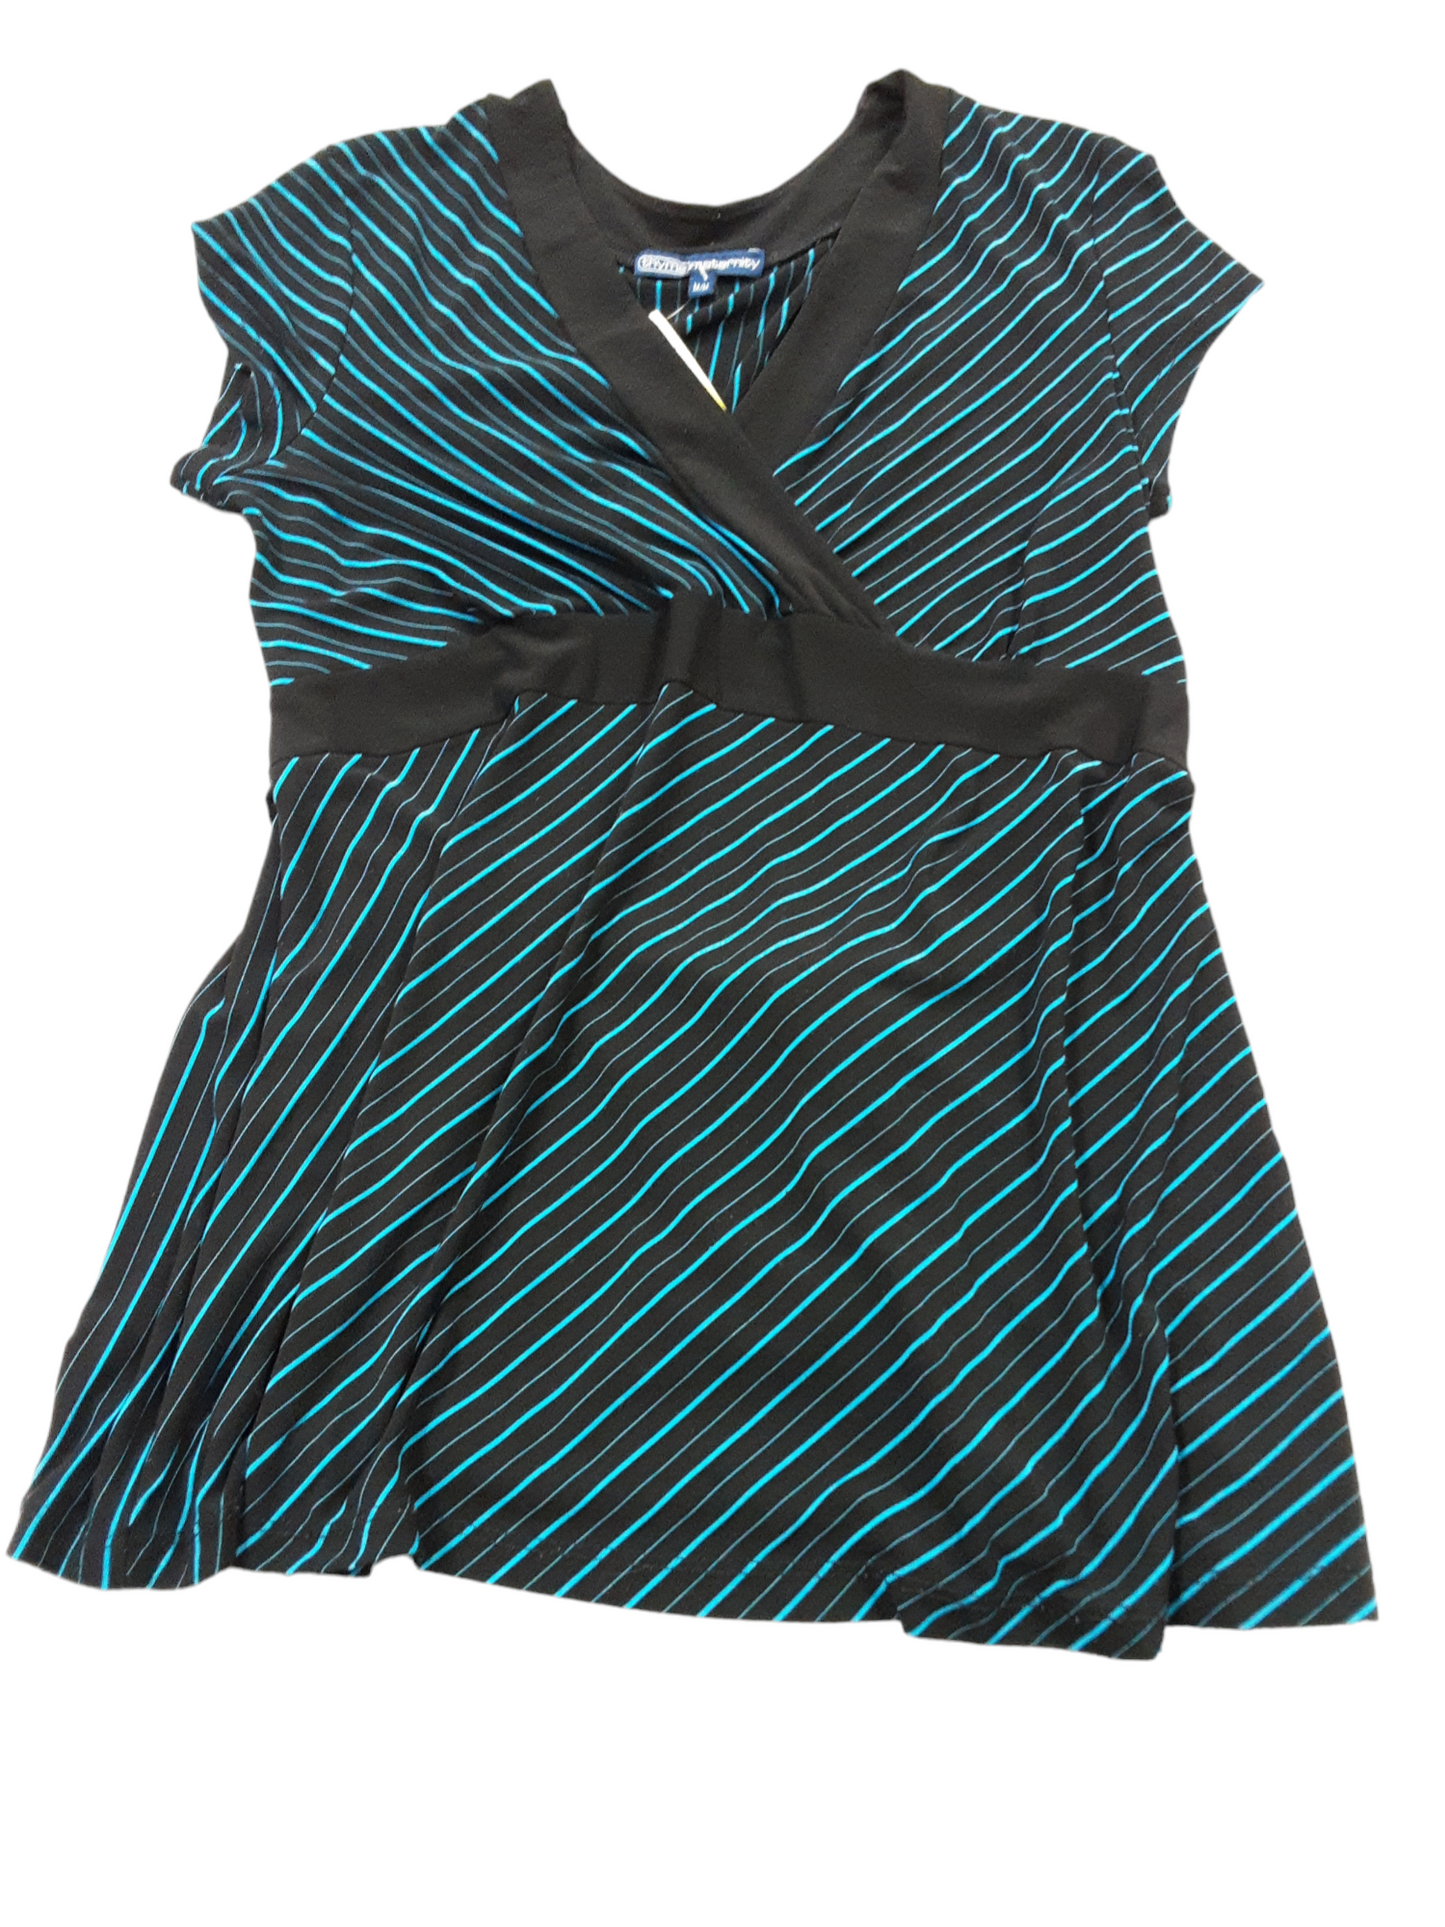 Blue/black striped maternity top size medium